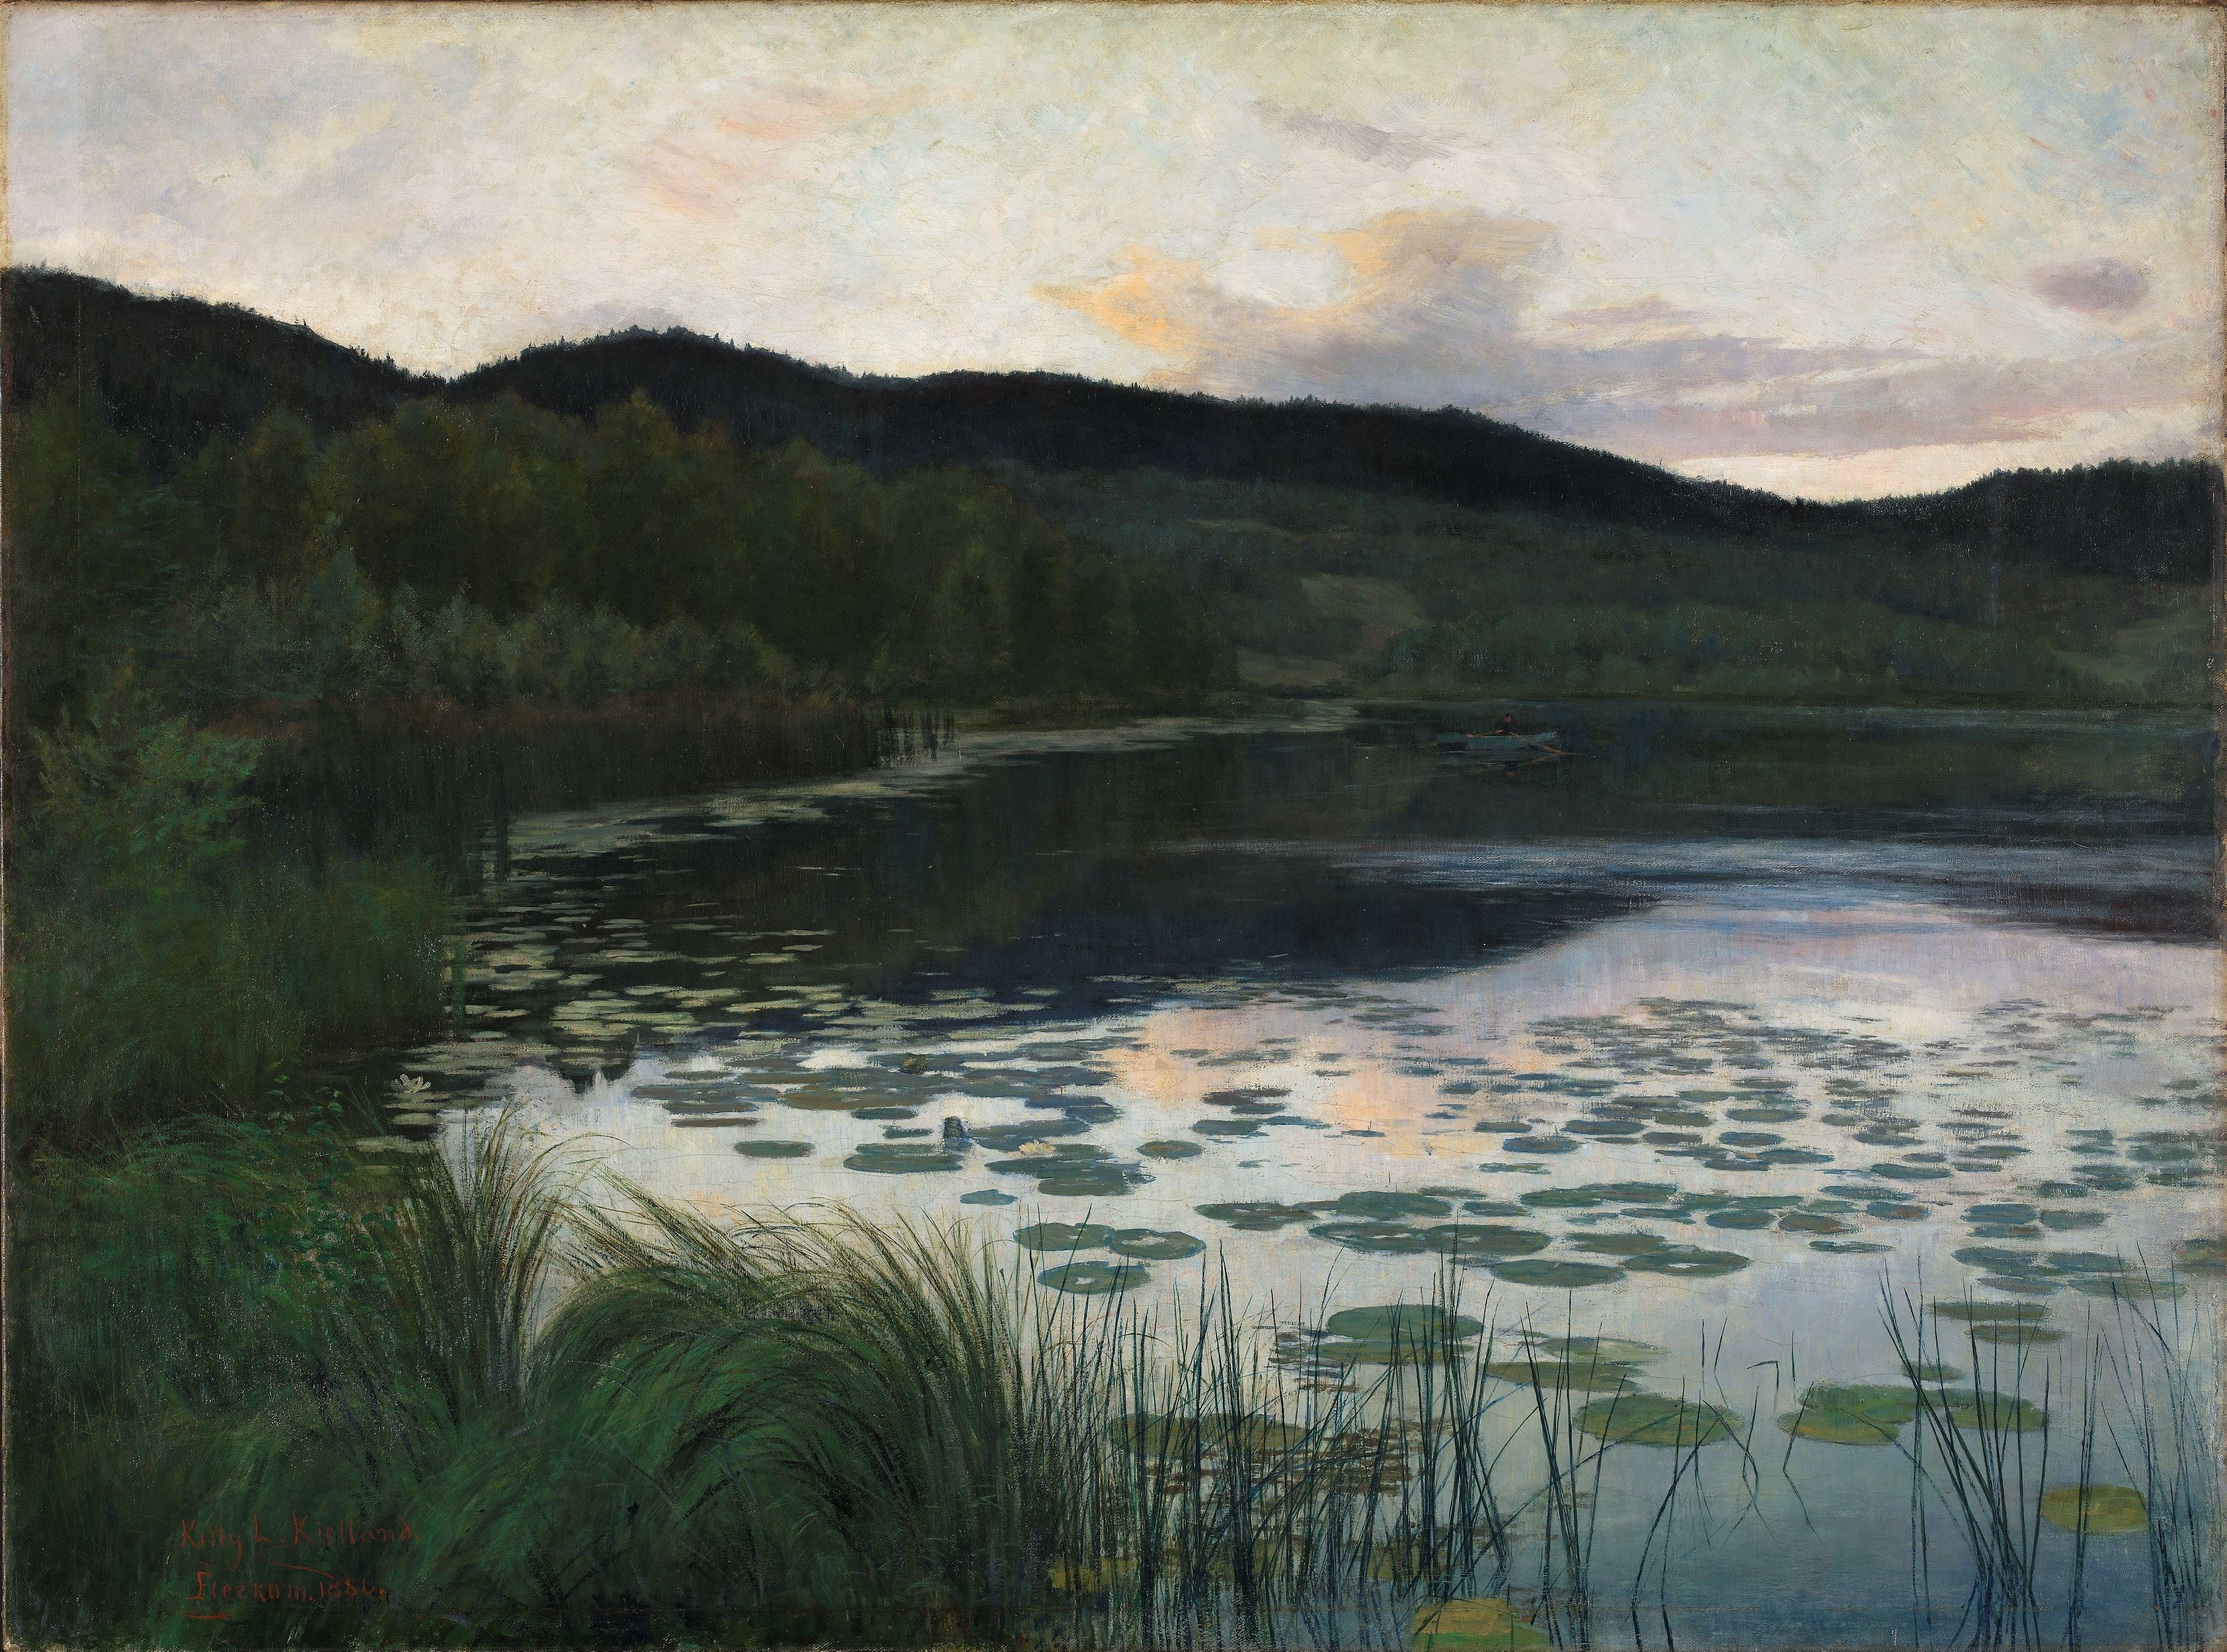 Letní noc by Kitty Kielland - 1886 - 135.5 x 100.5 cm 